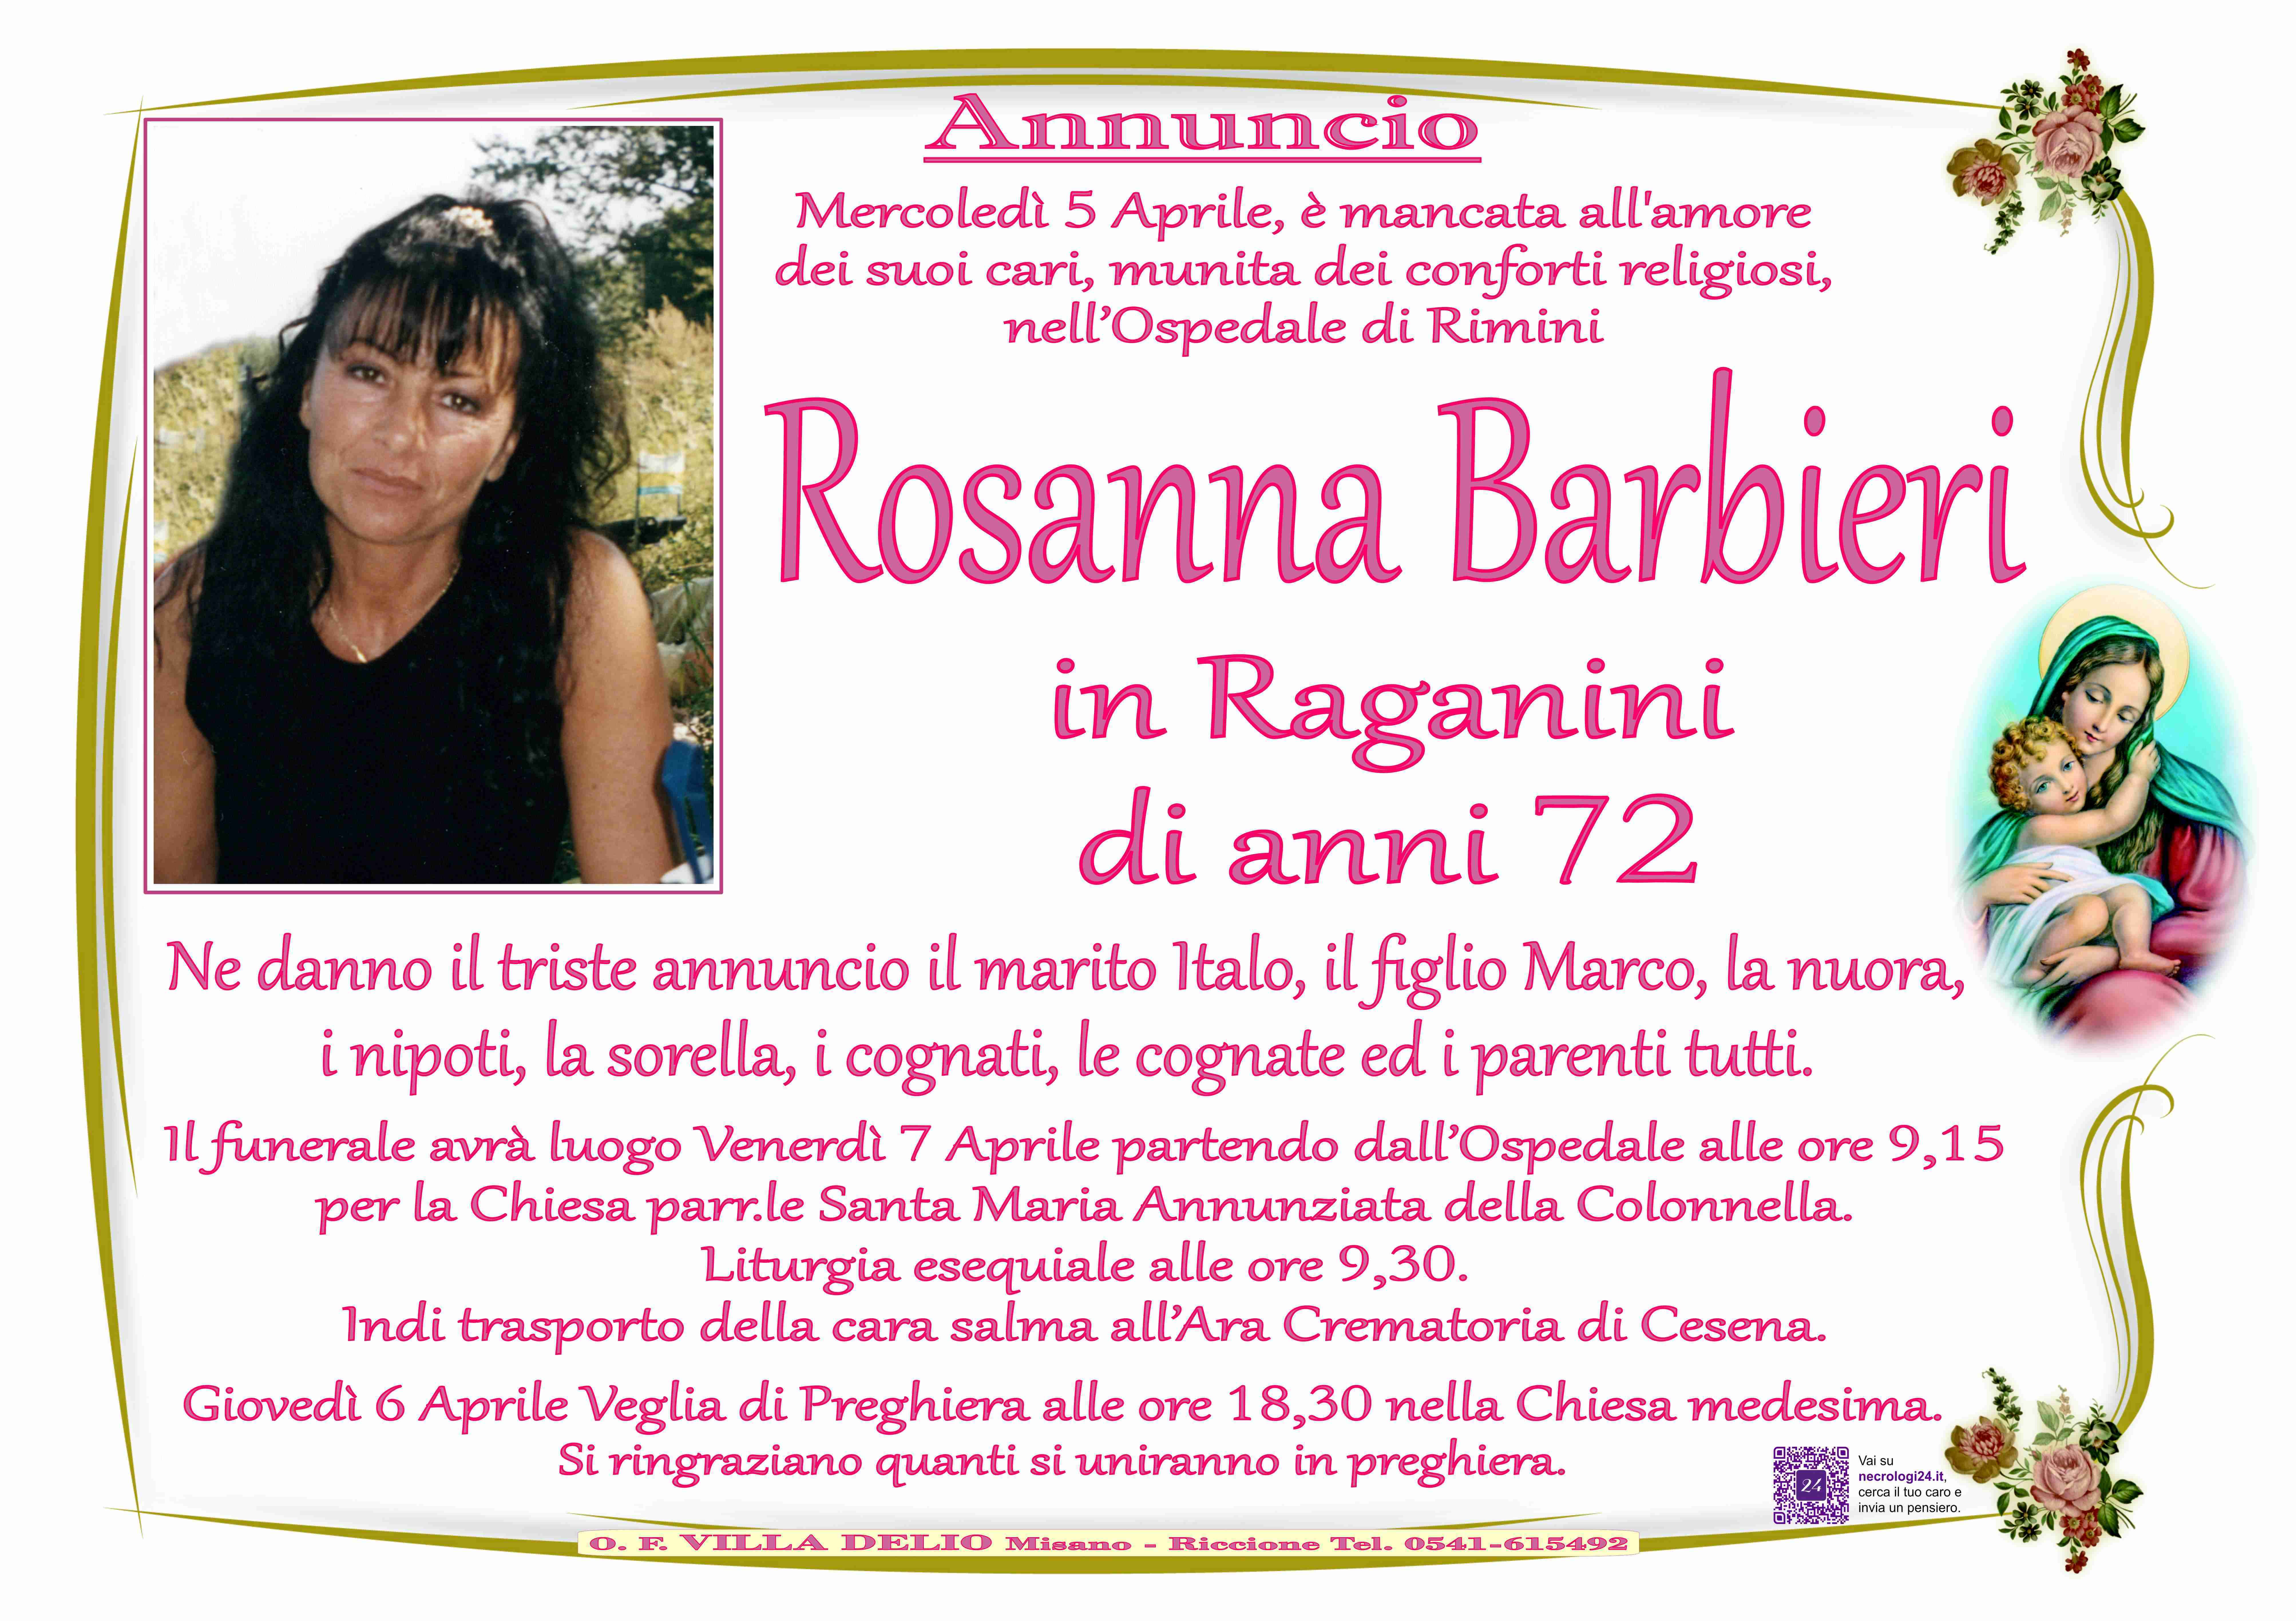 Rosanna Barbieri